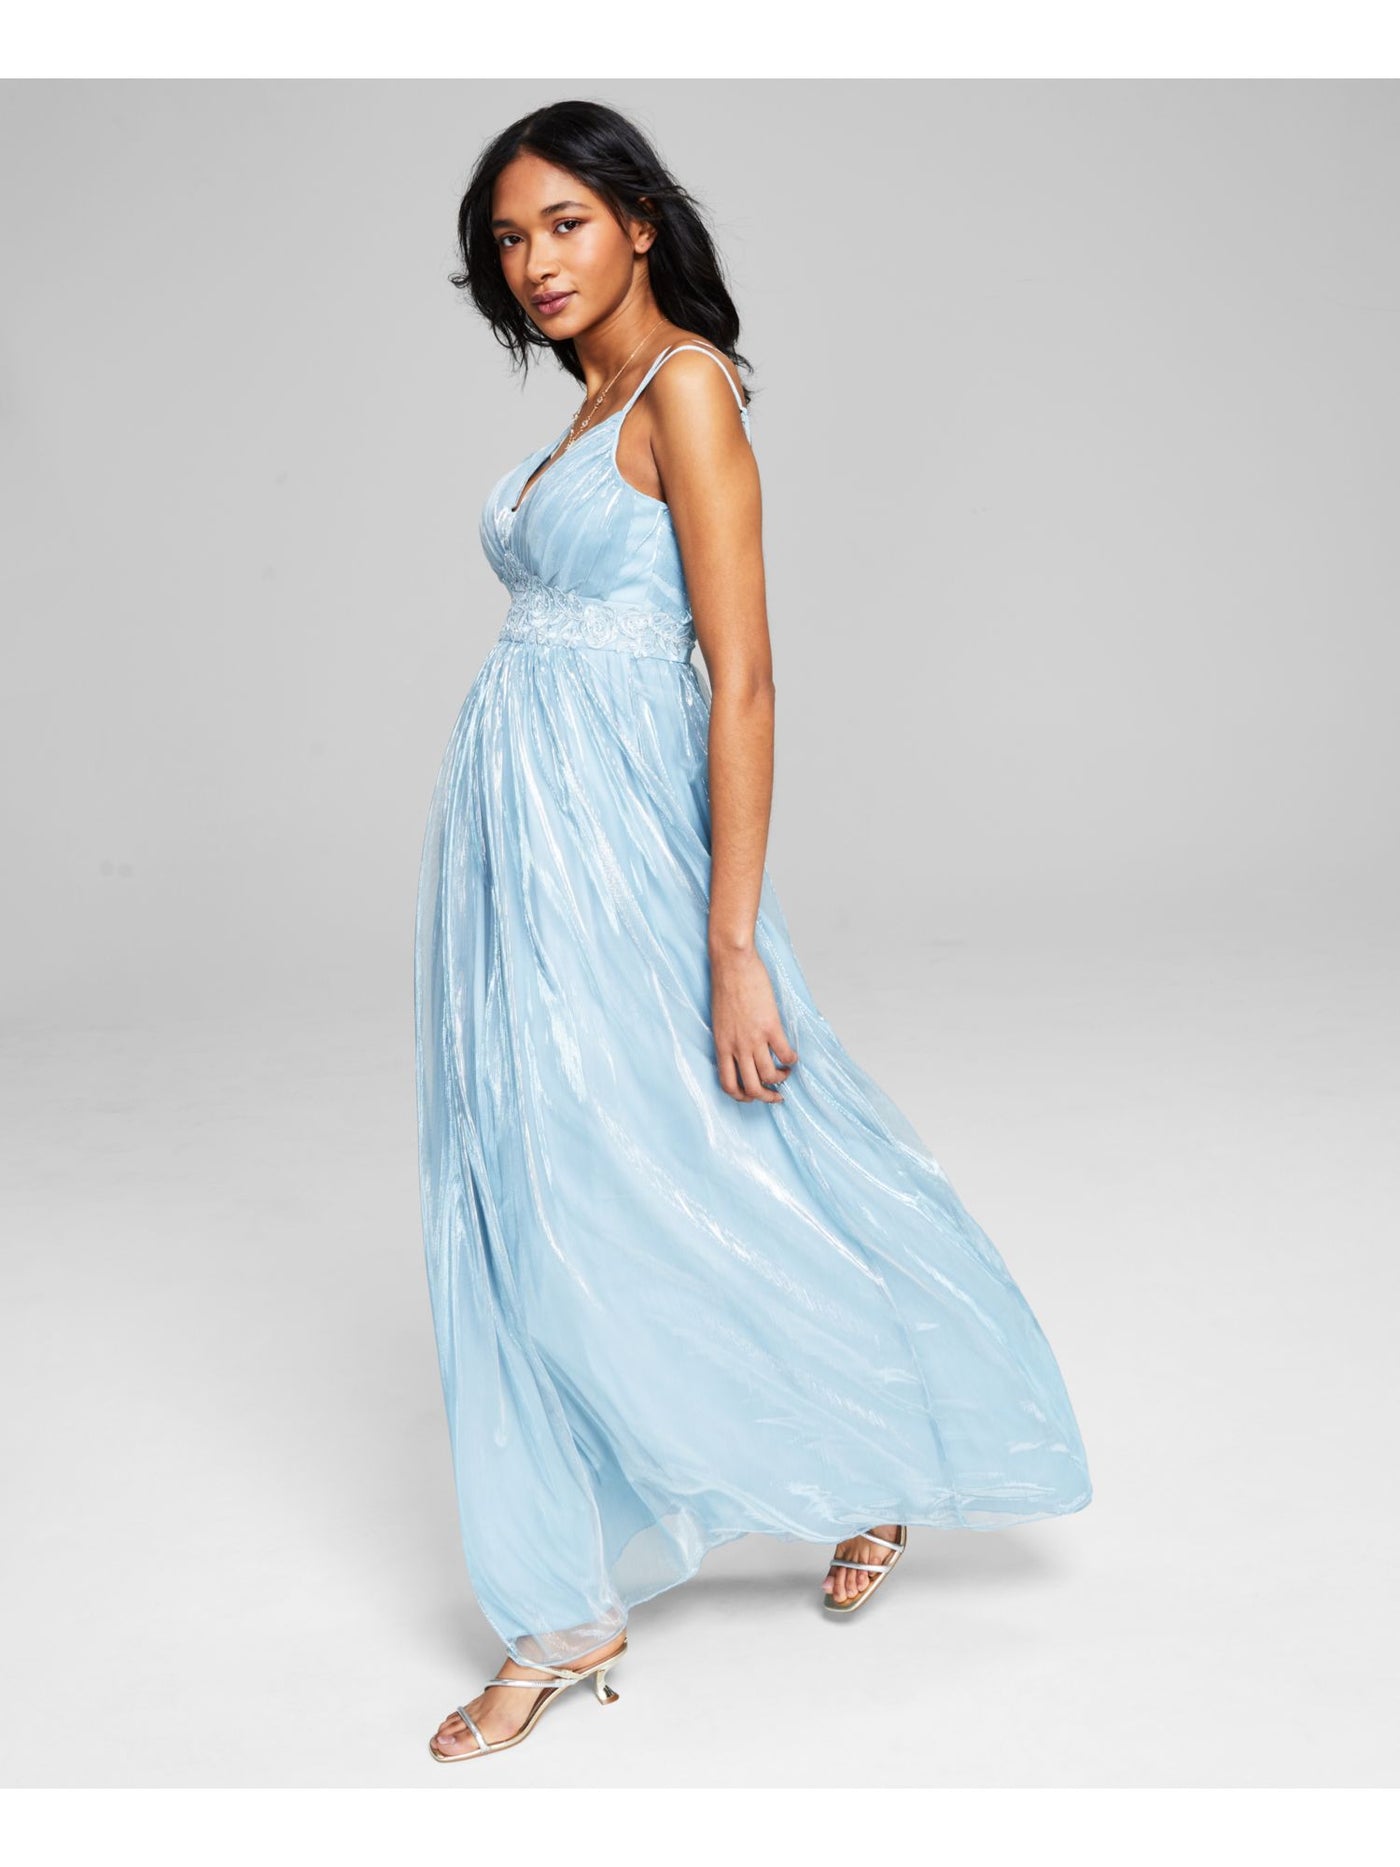 TEEZE ME Womens Light Blue Embroidered Beaded Zippered Lined Sleeveless V Neck Full-Length  Gown Prom Dress Juniors 11\12